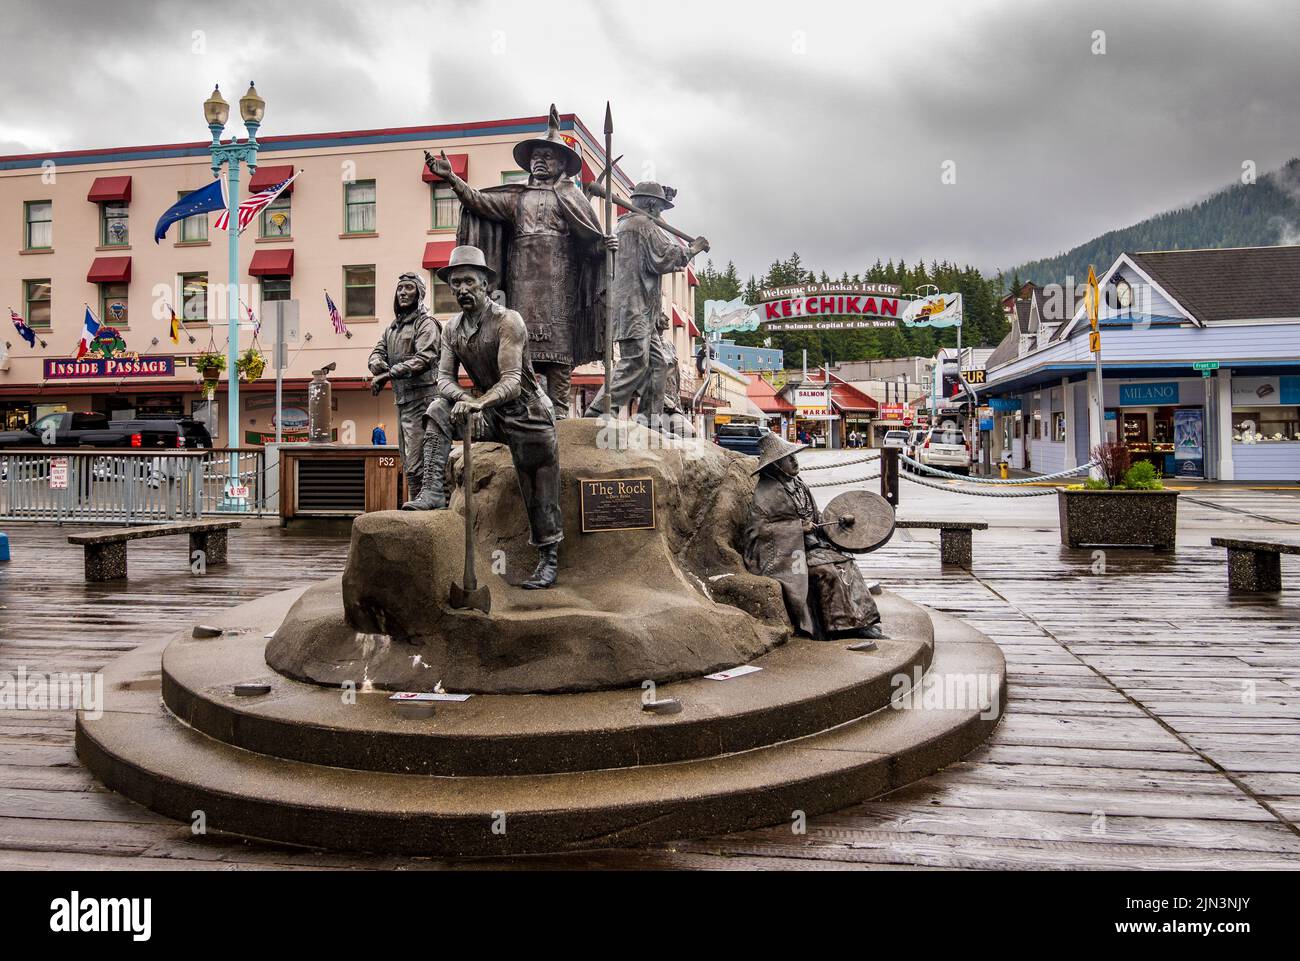 Ketchikan, AK - 10 de junio de 2022: Estatua de los pioneros llamada La Roca en Ketchikan, Alaska Foto de stock